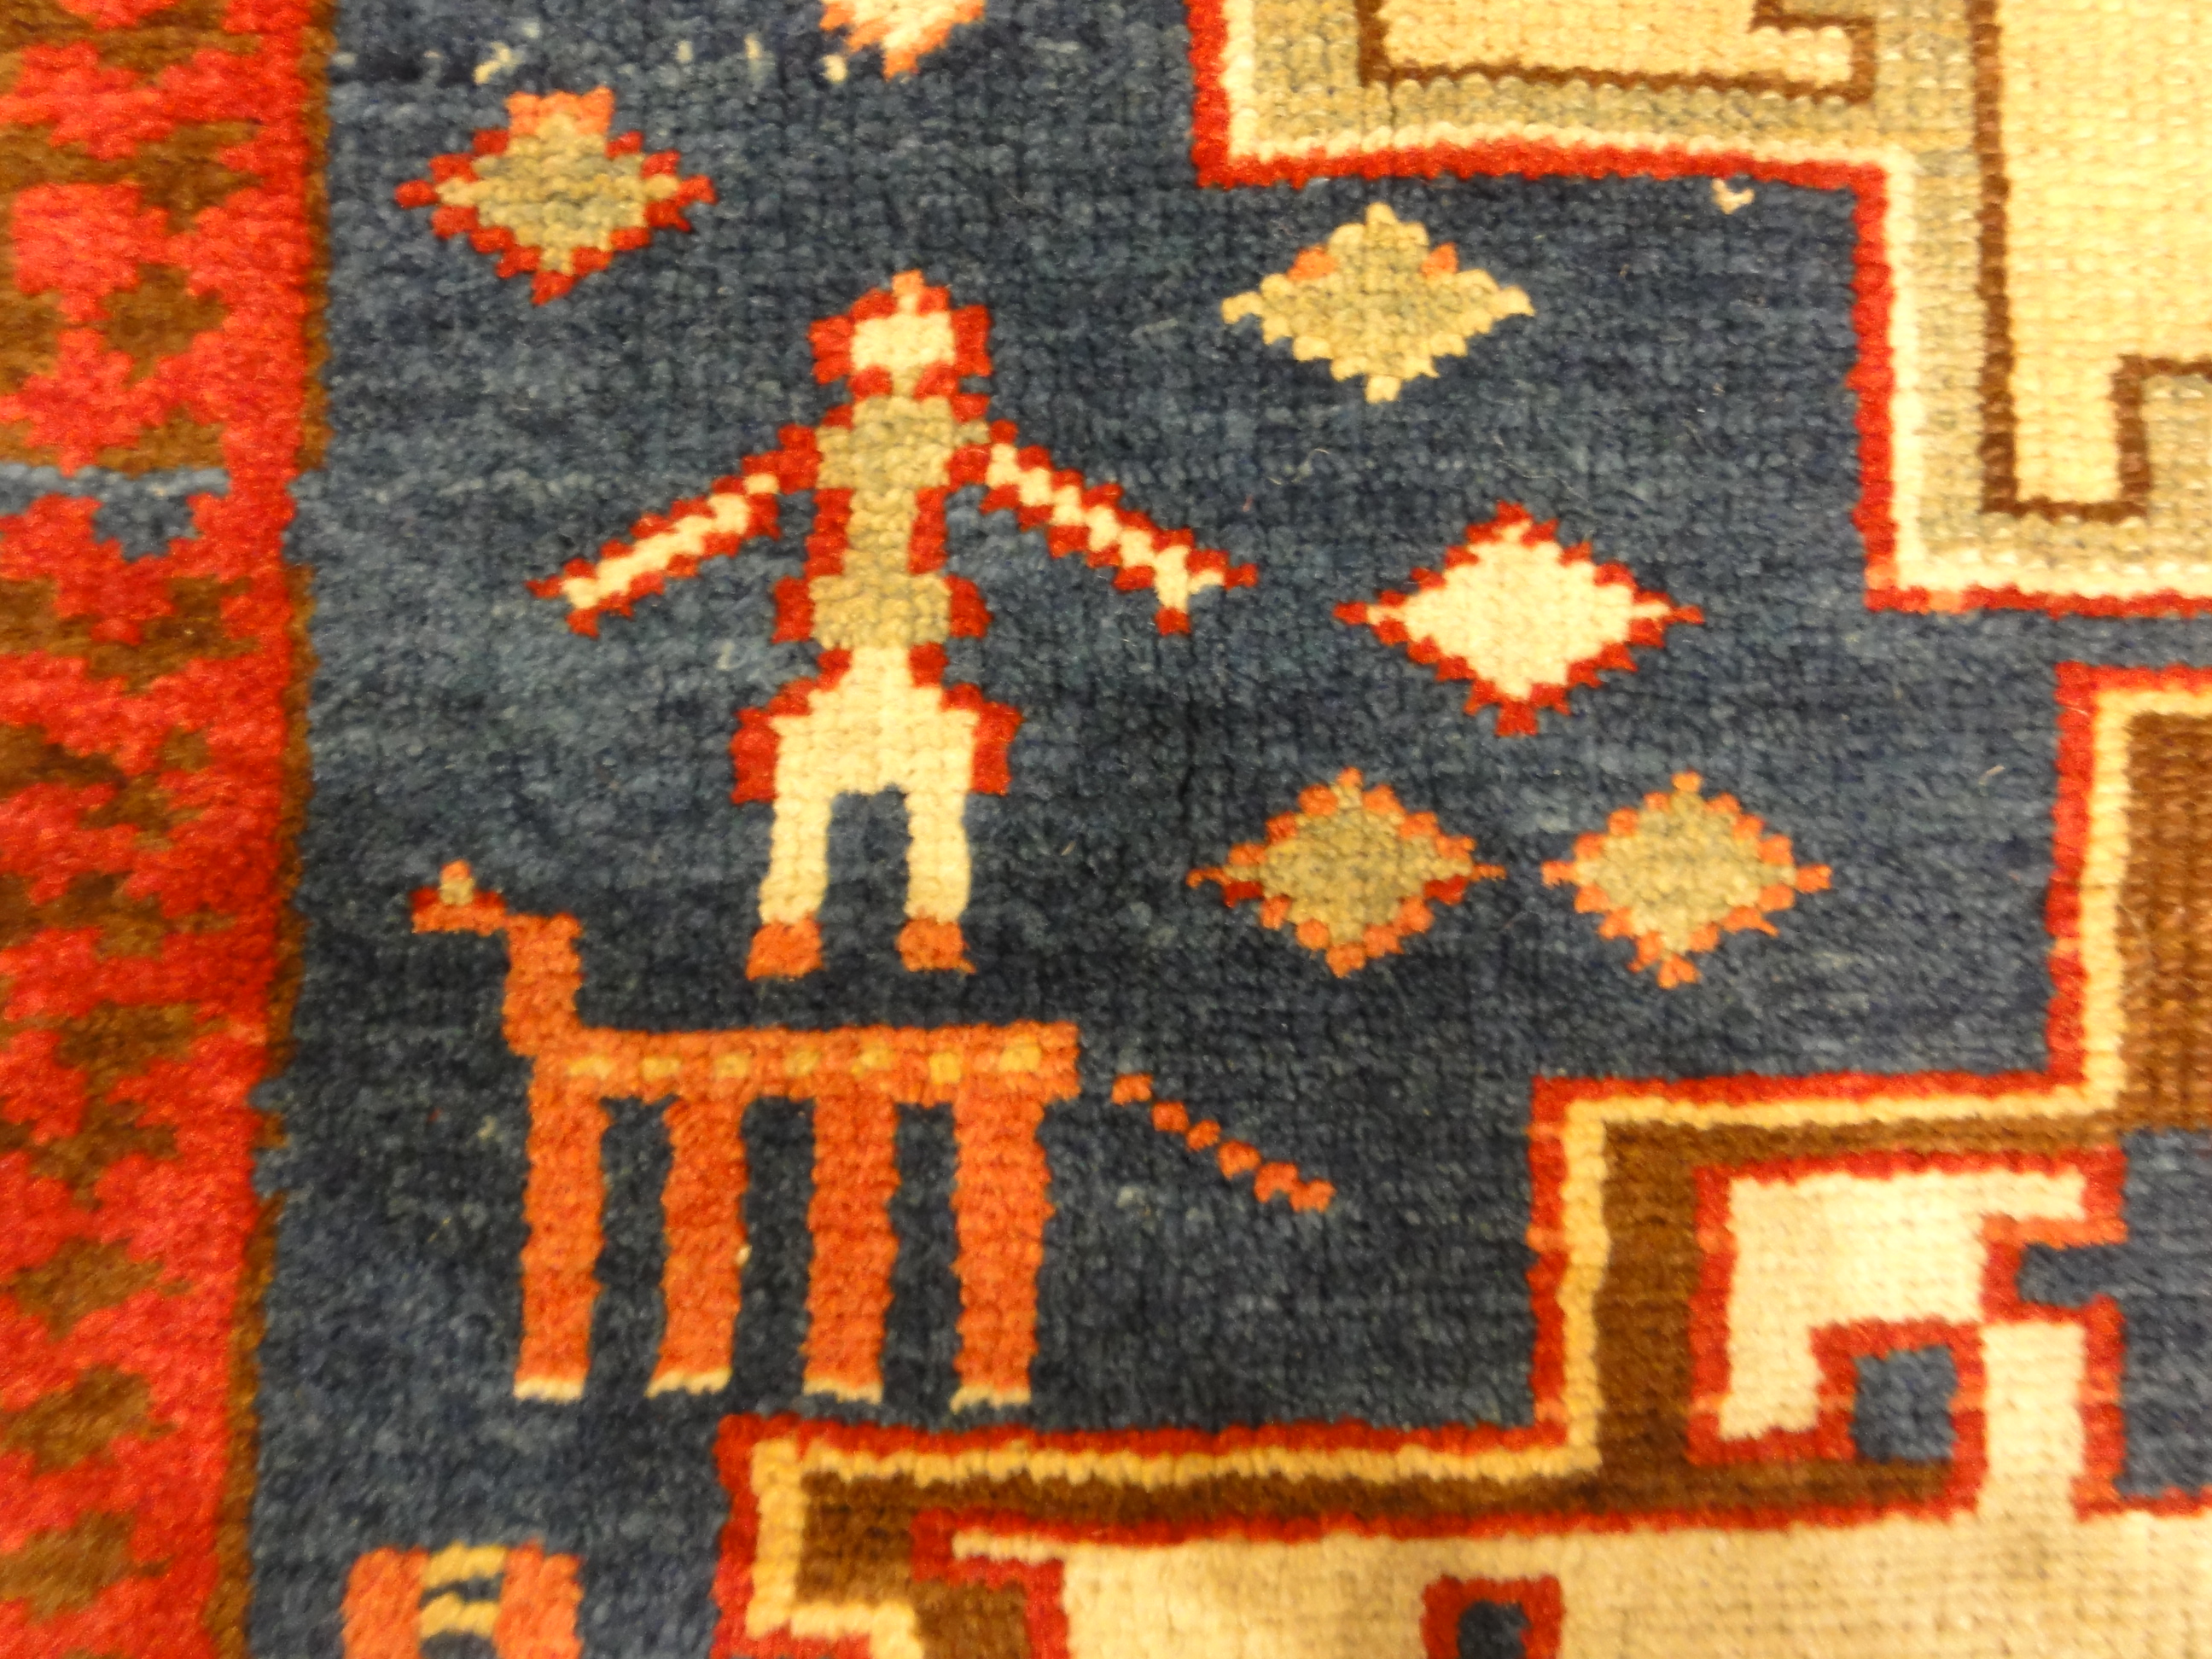 Rare Antique Leshgi Star Rug featuring Men Standing on Horses. A piece of genuine antique authentic woven carpet art sold by Santa Barbara Design Center.